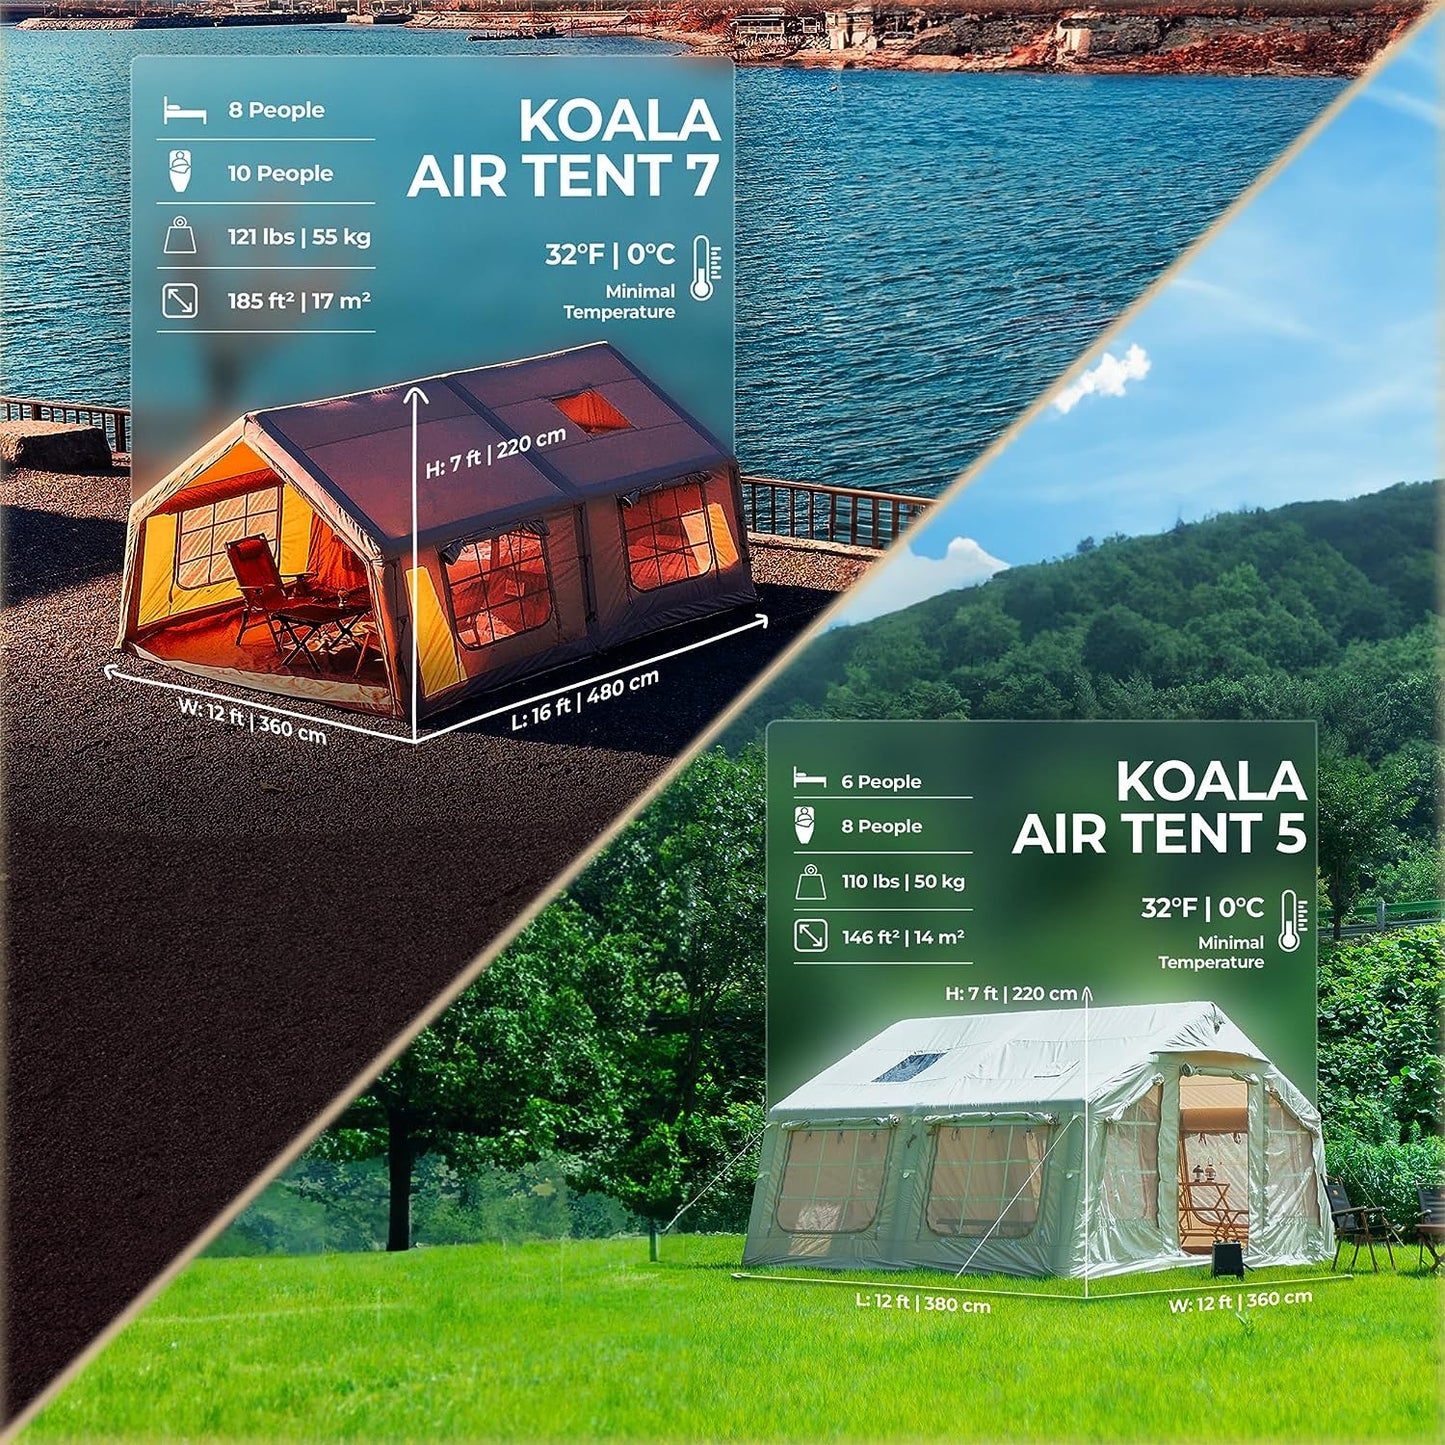 Koala Air Tent 7 - Premium Inflatable Outdoor Tent - Big Horn Golfer